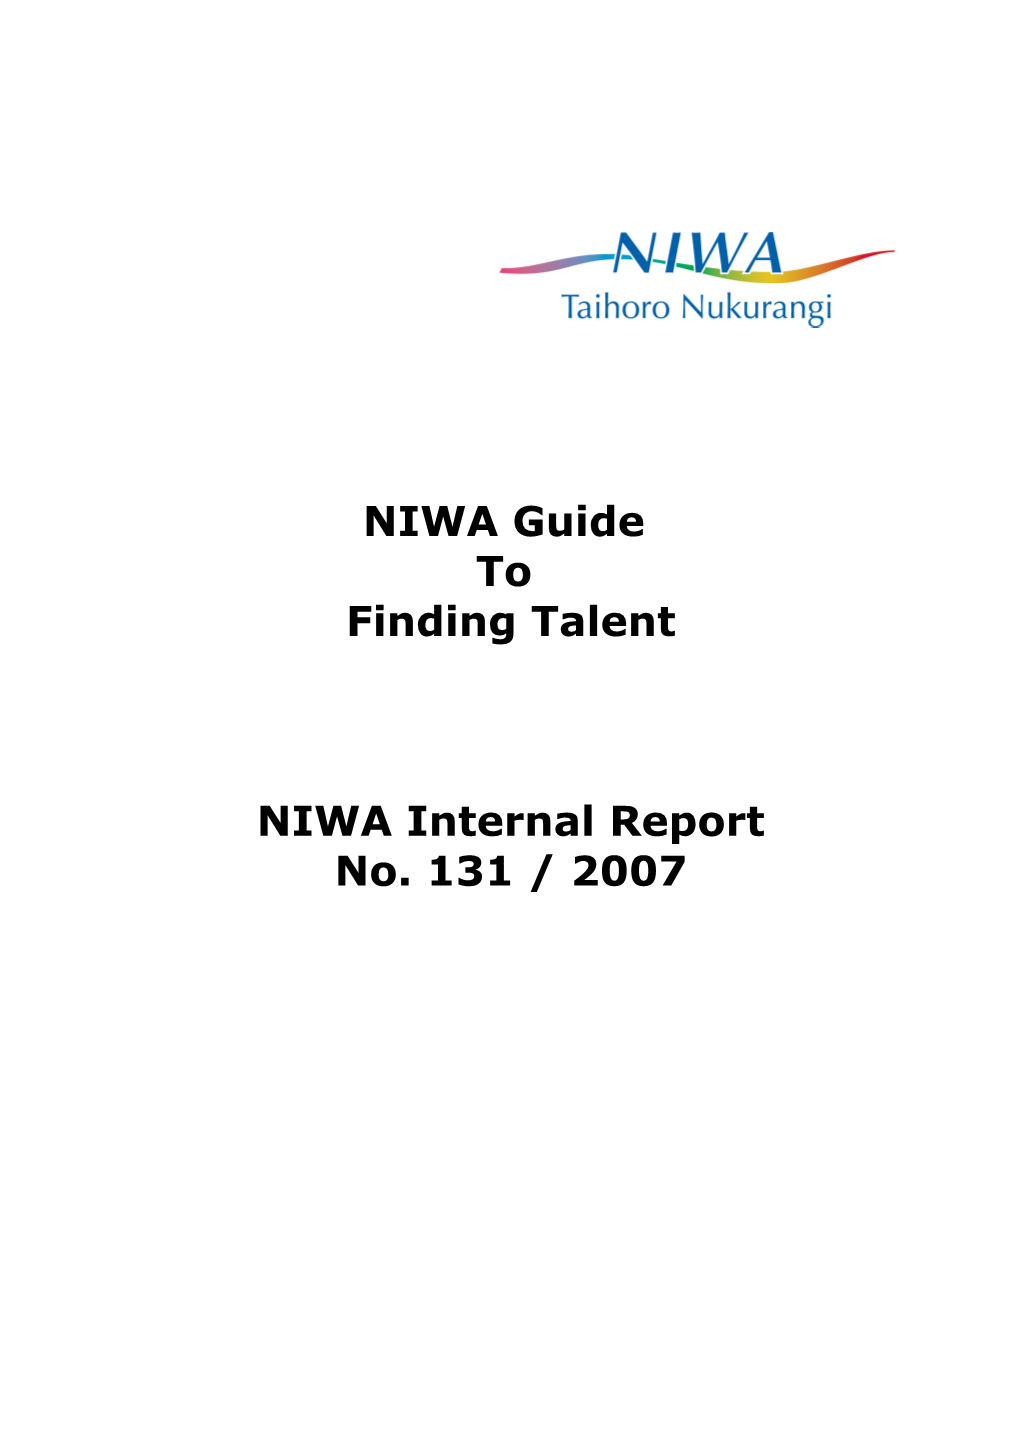 NIWA Internal Report